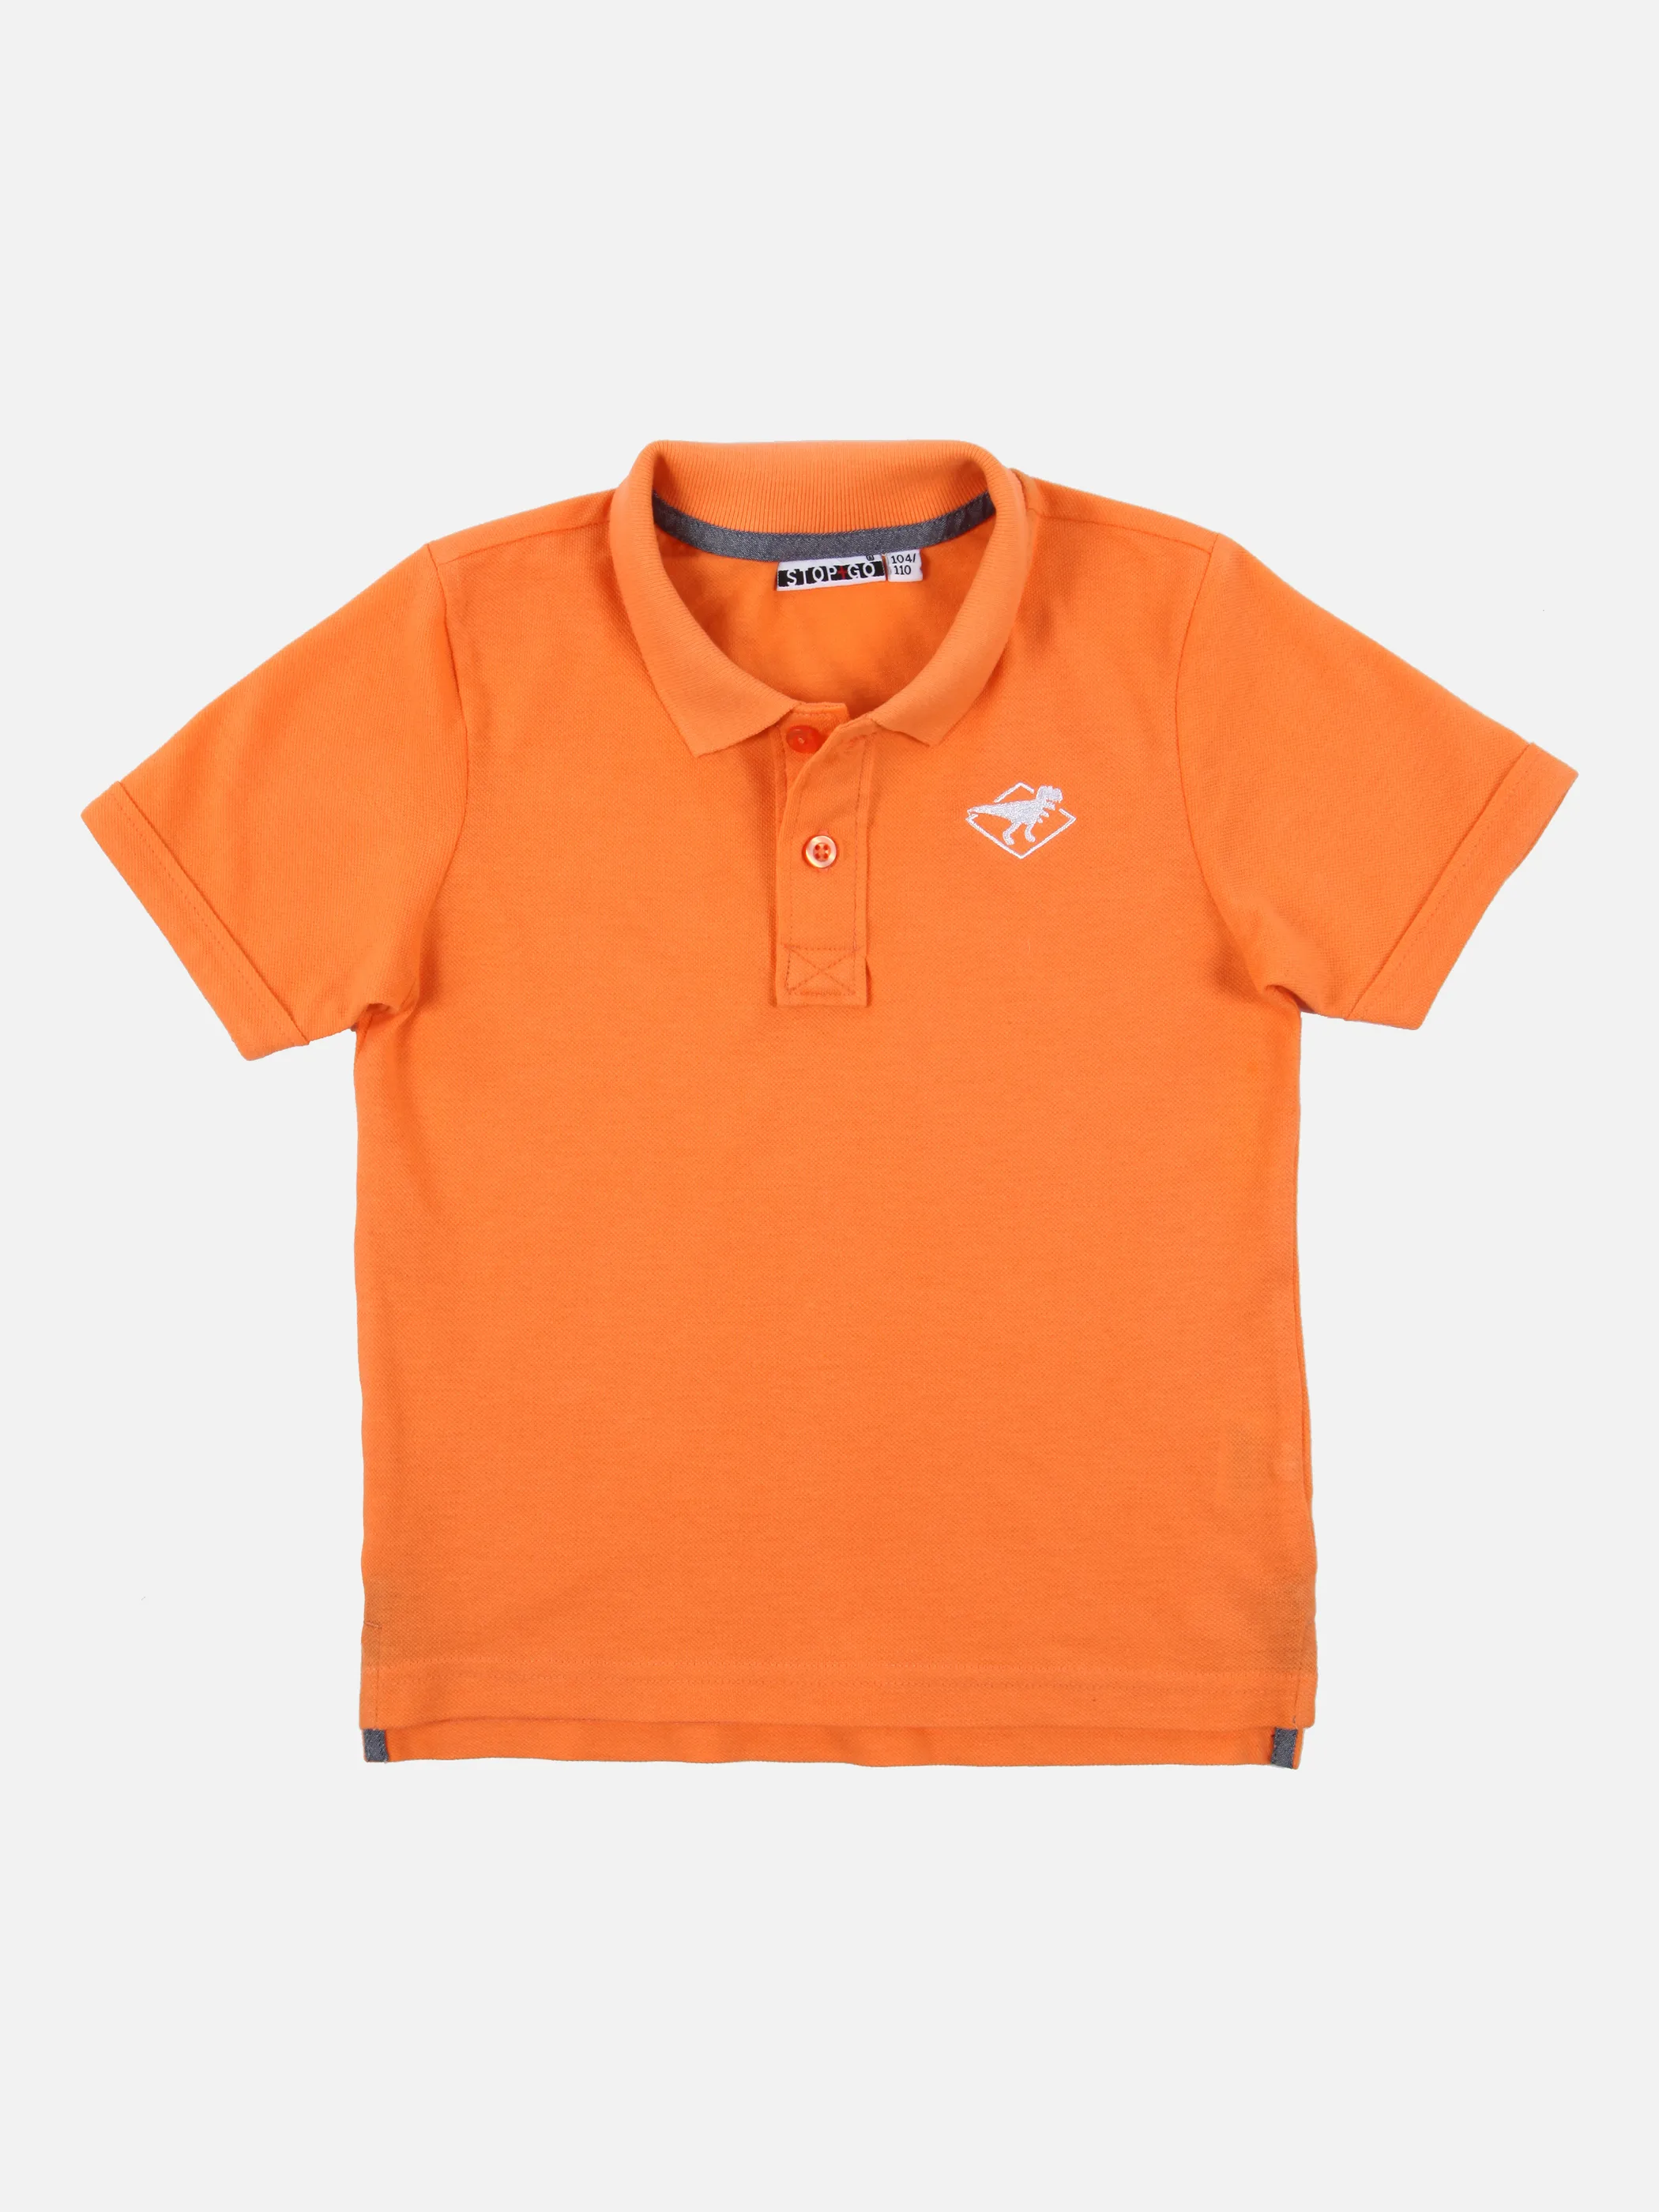 Stop + Go MB Poloshirt 1/4 Arm in orange Orange 851600 ORANGE 1